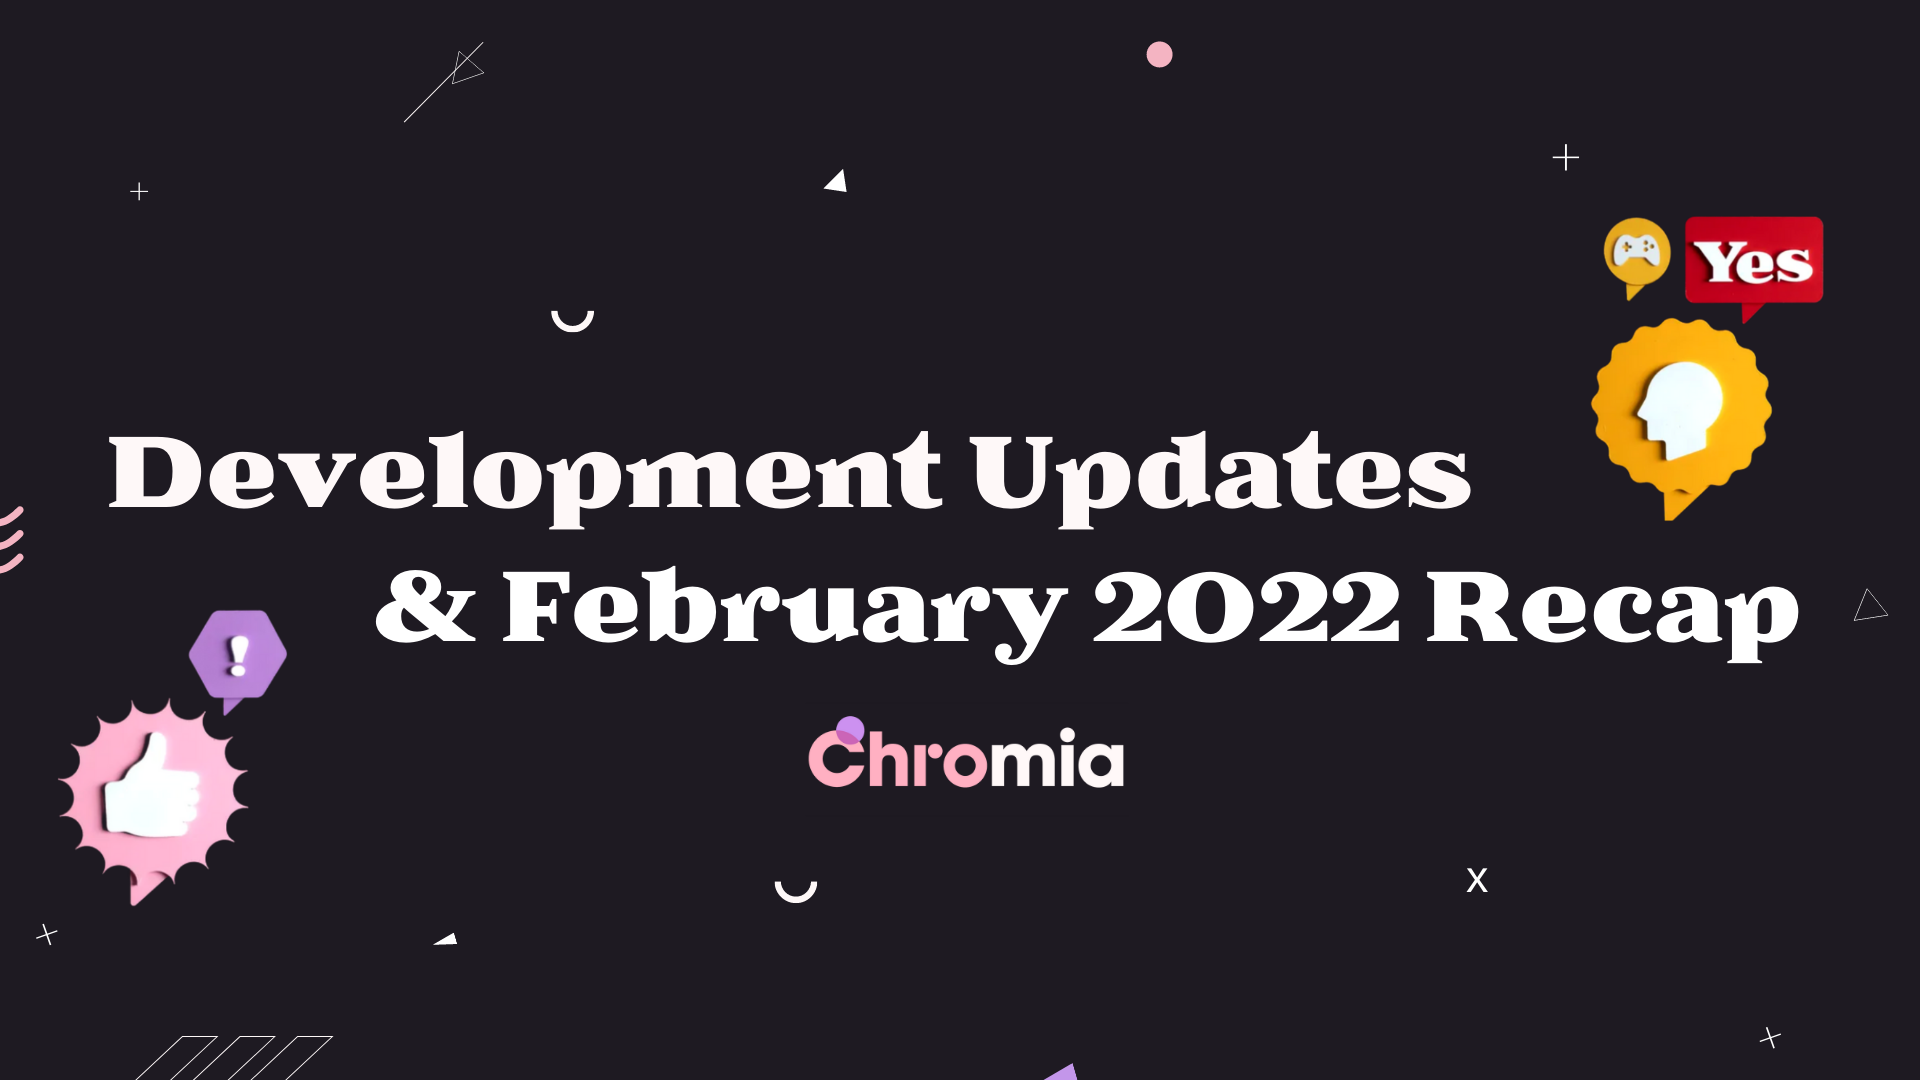 Chromia: February 2022 Recap and Development Update